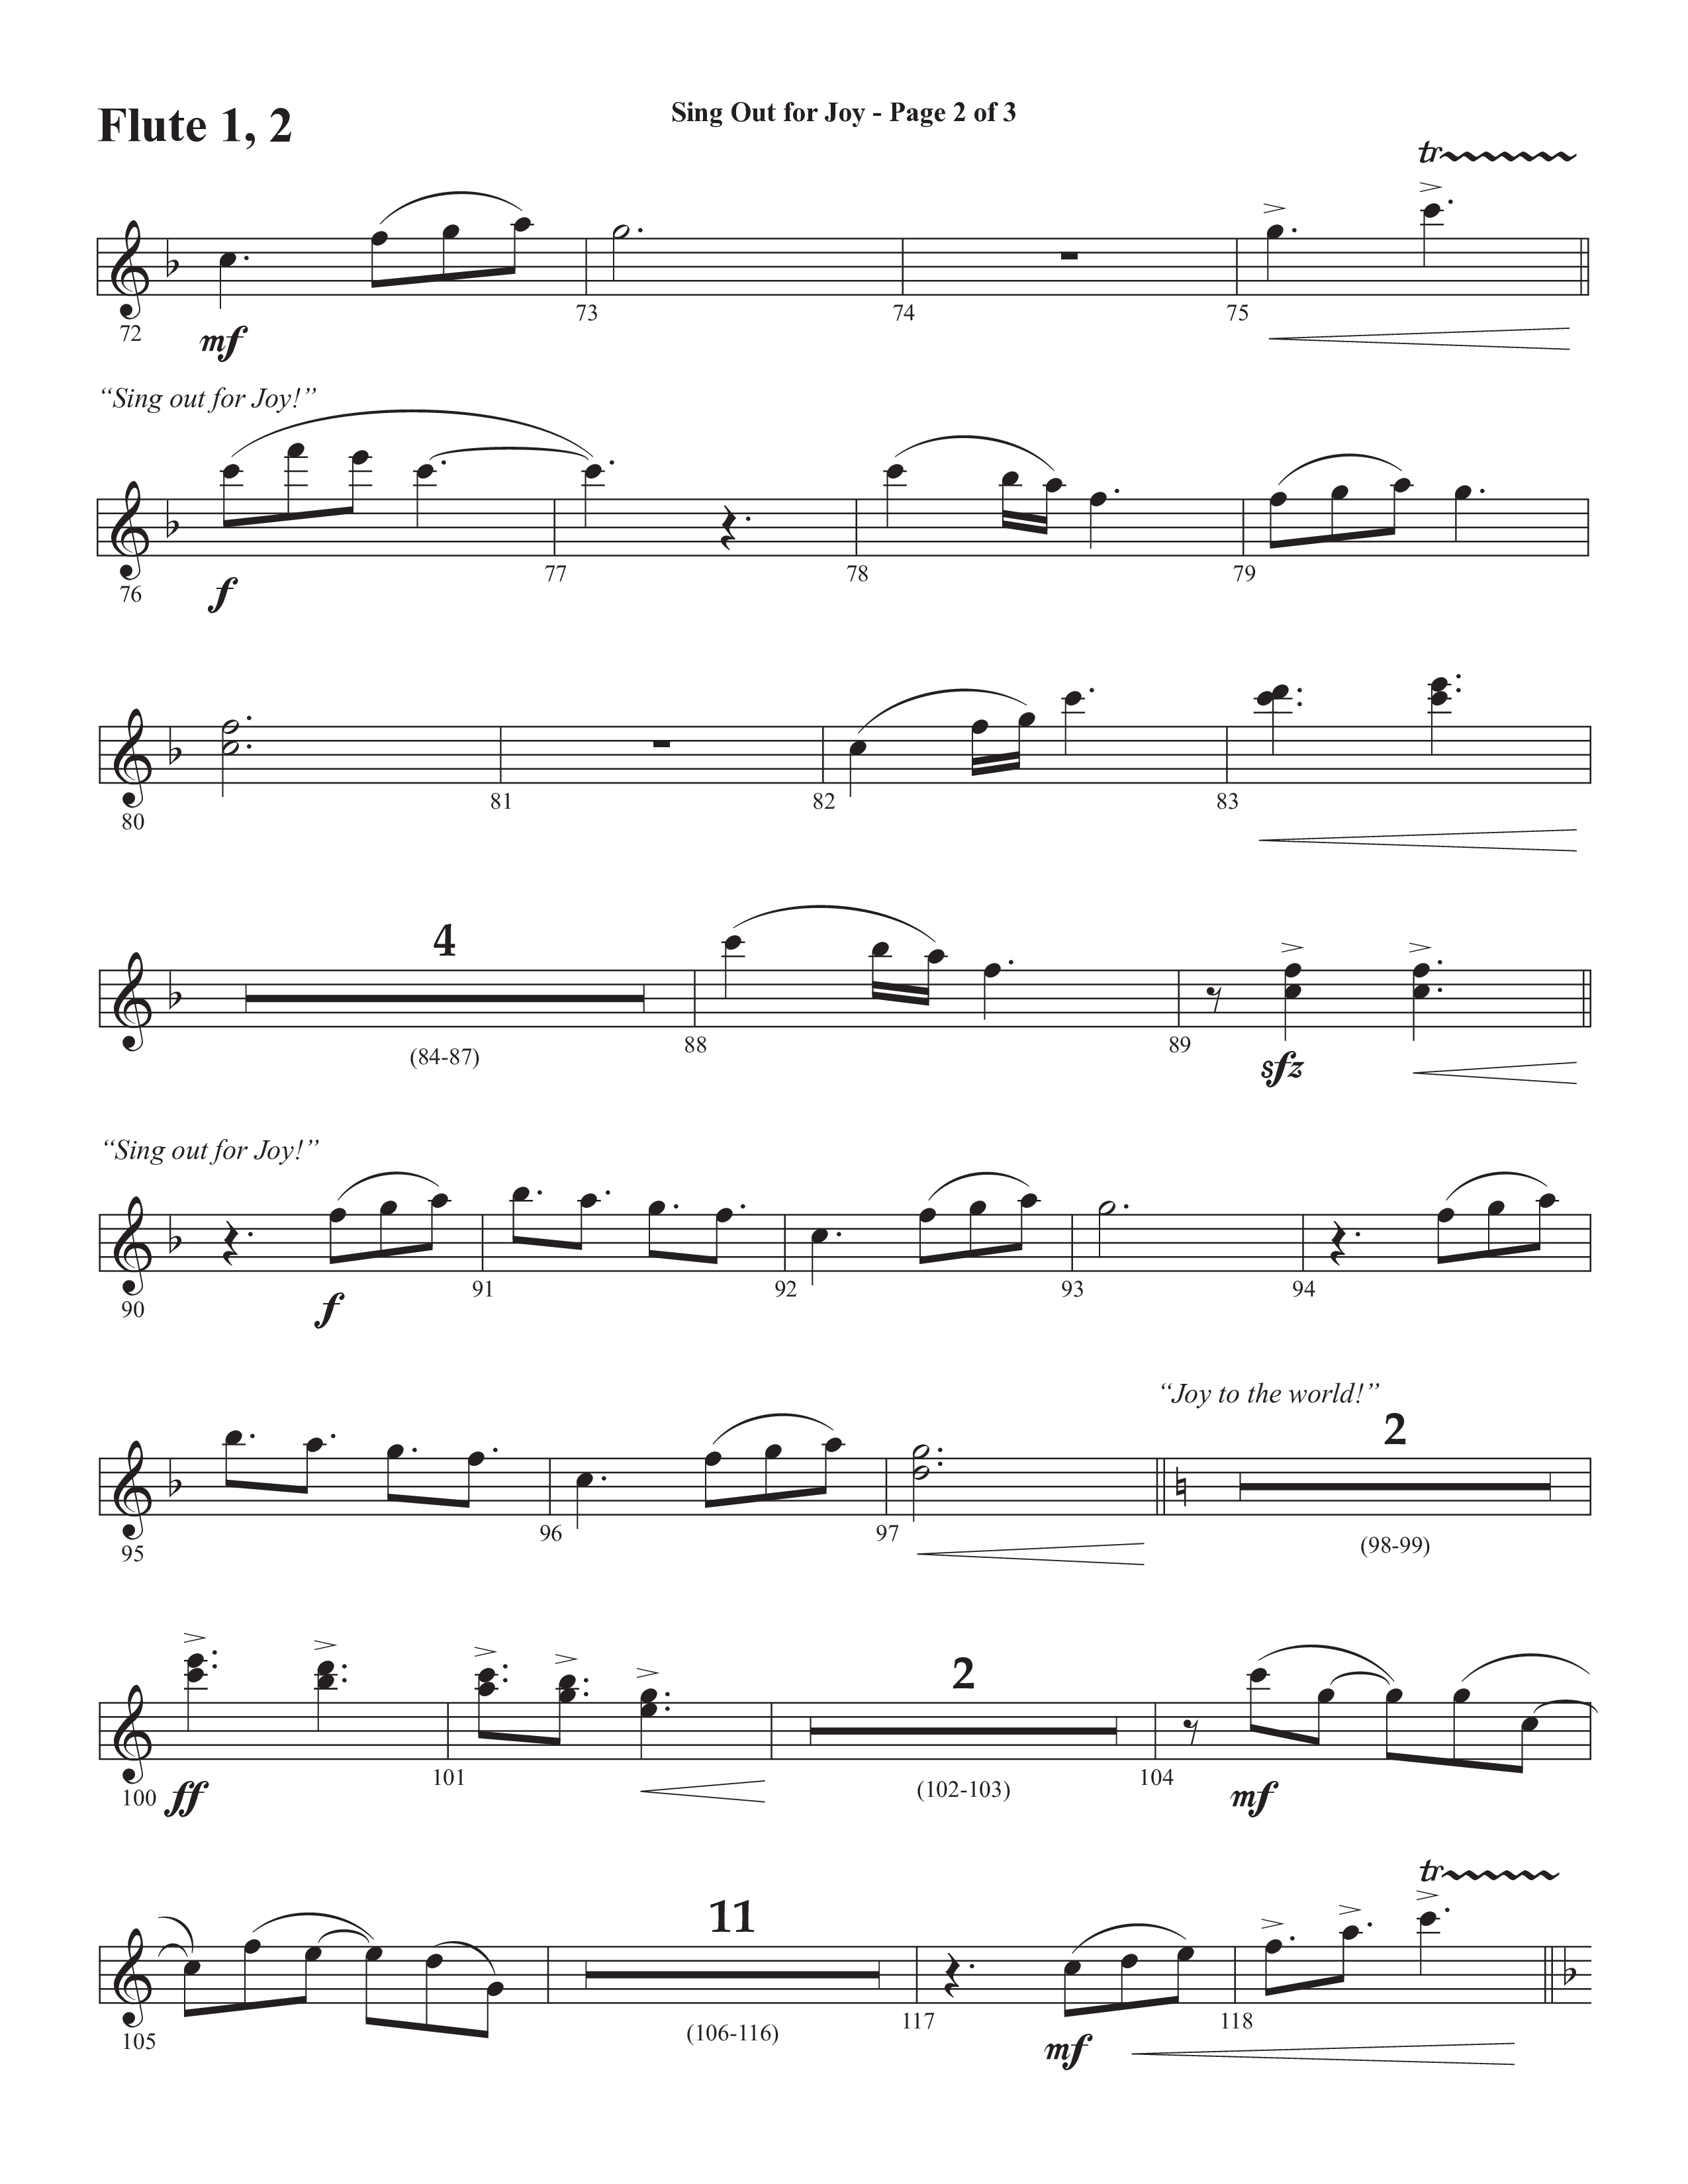 Sing Out For Joy (Choral Anthem SATB) Flute 1/2 (Semsen Music / Arr. John Bolin / Orch. Cliff Duren)